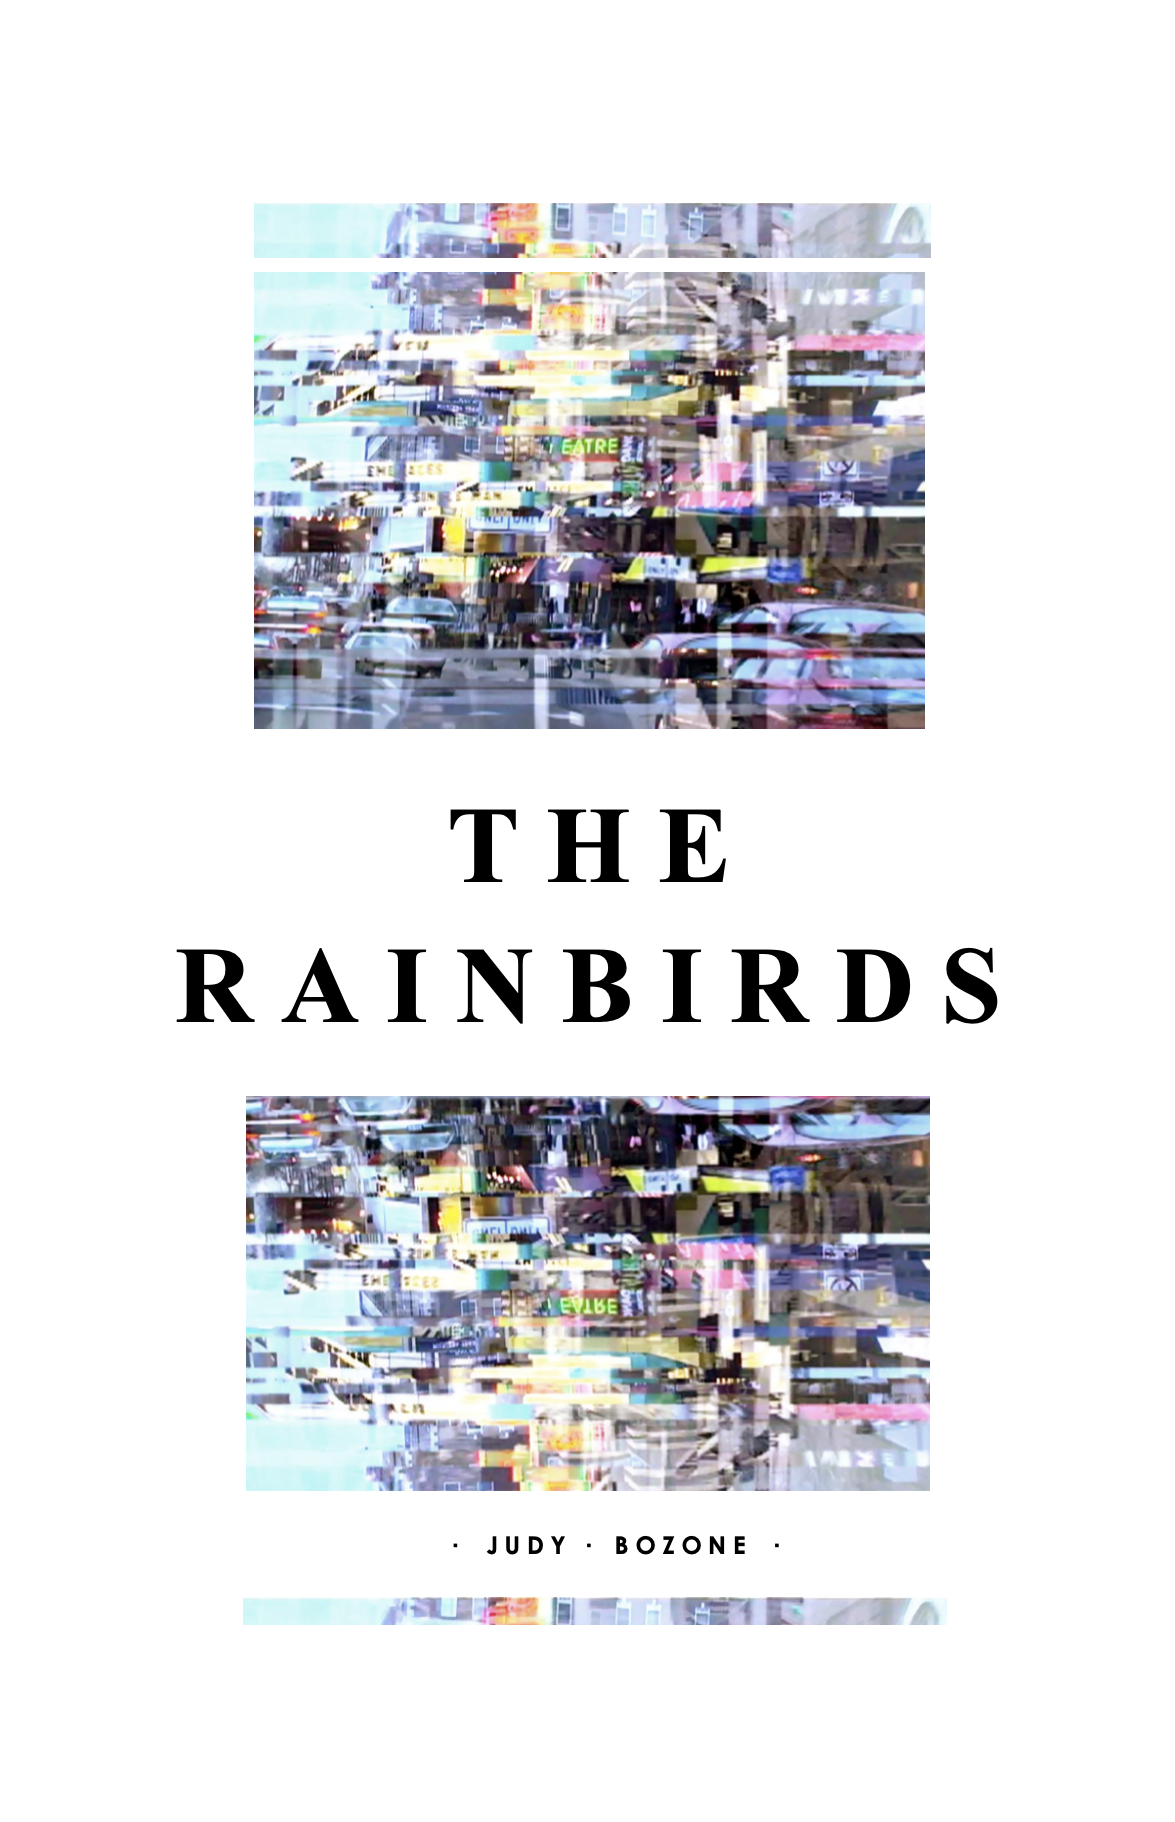 The Rainbirds by Judy Bozone